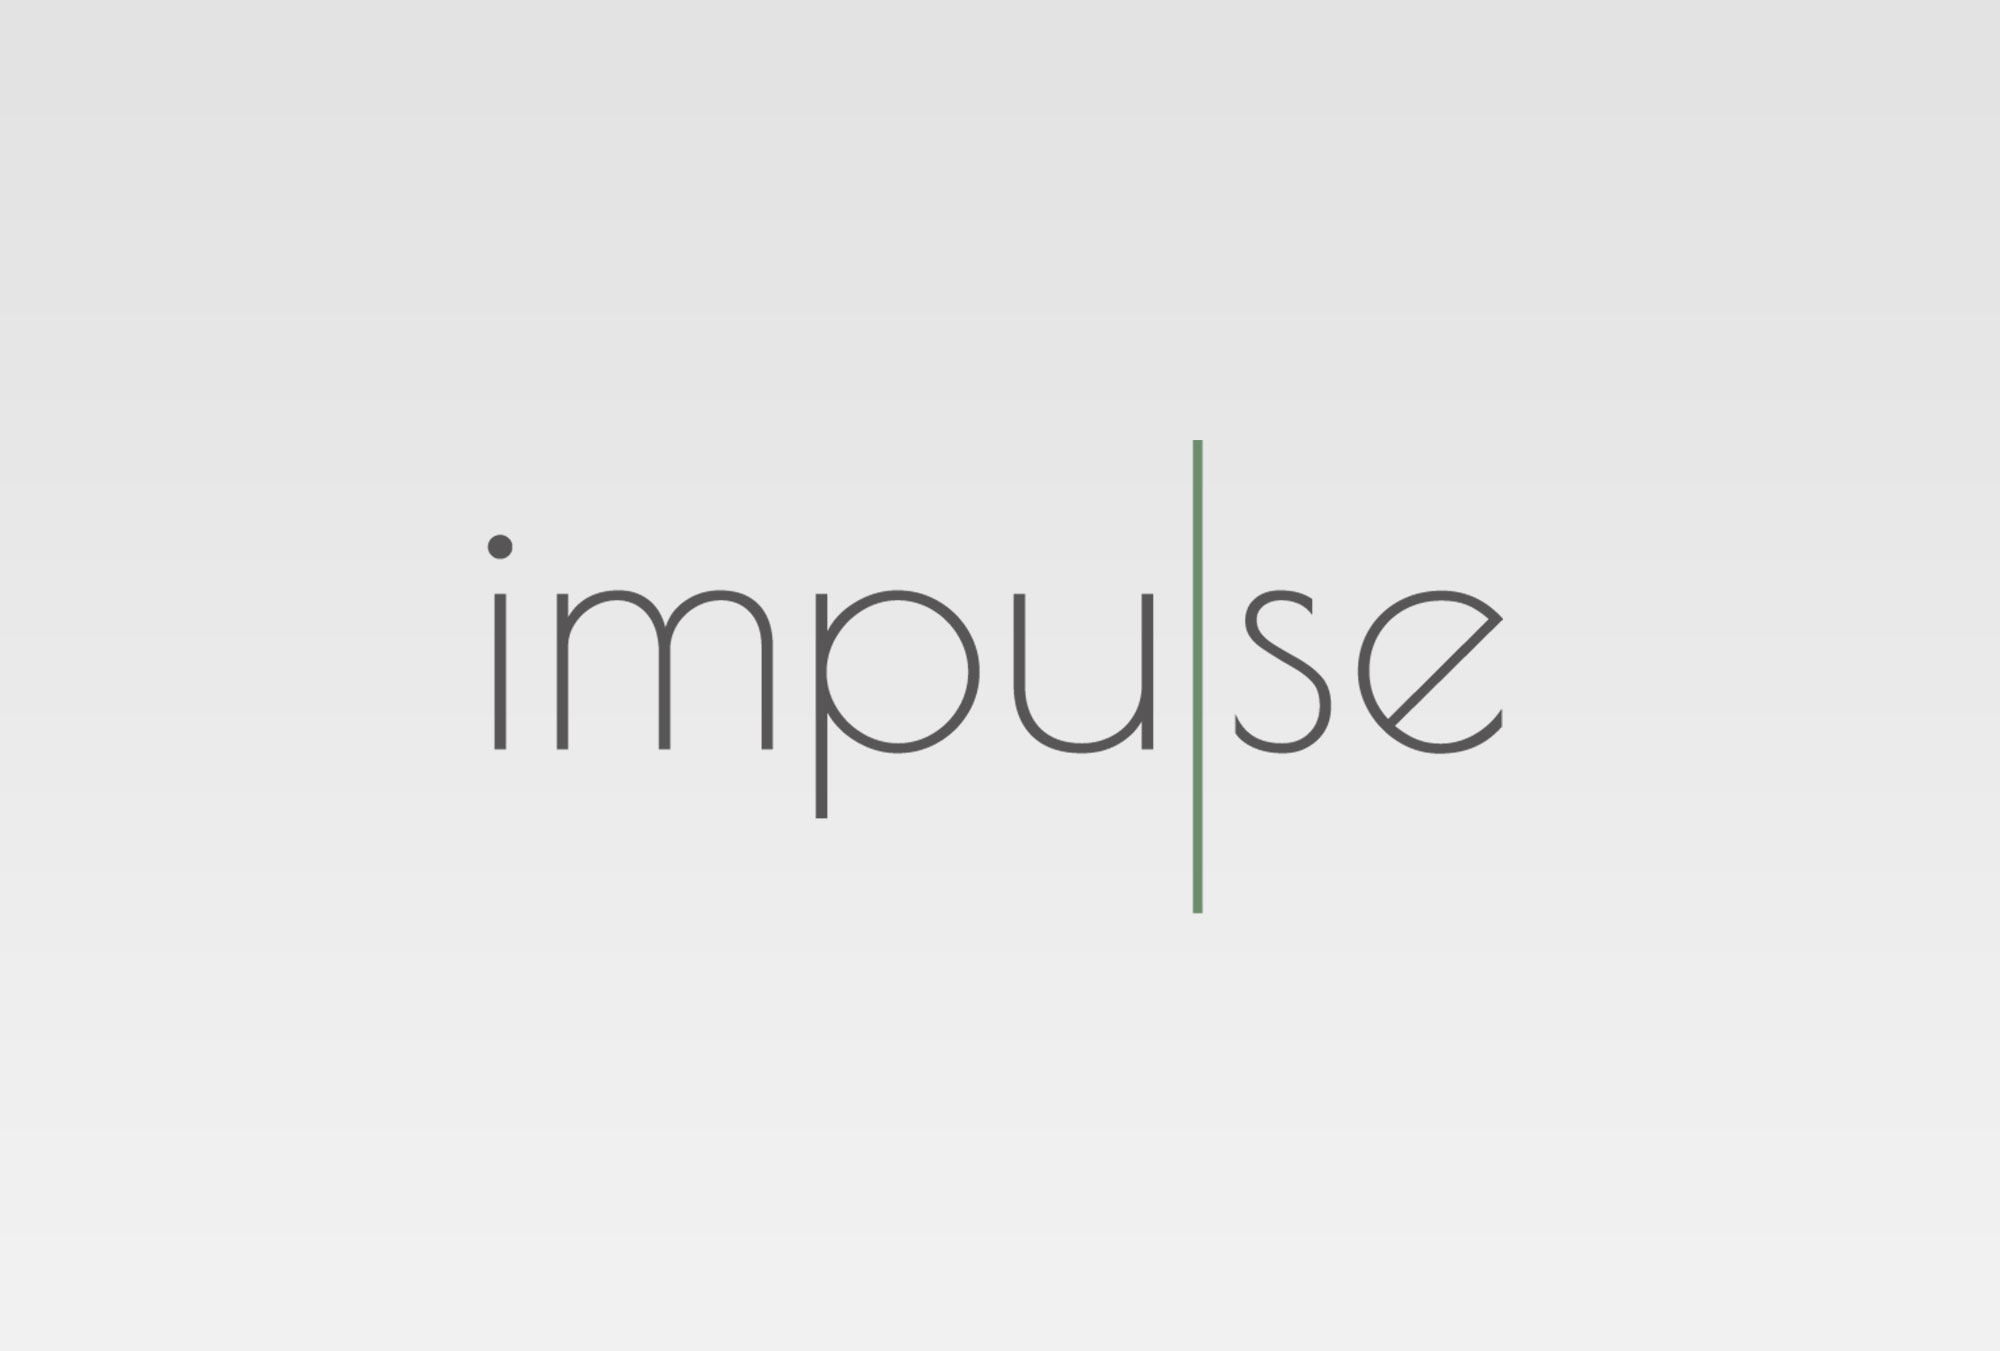 Logo Impulse